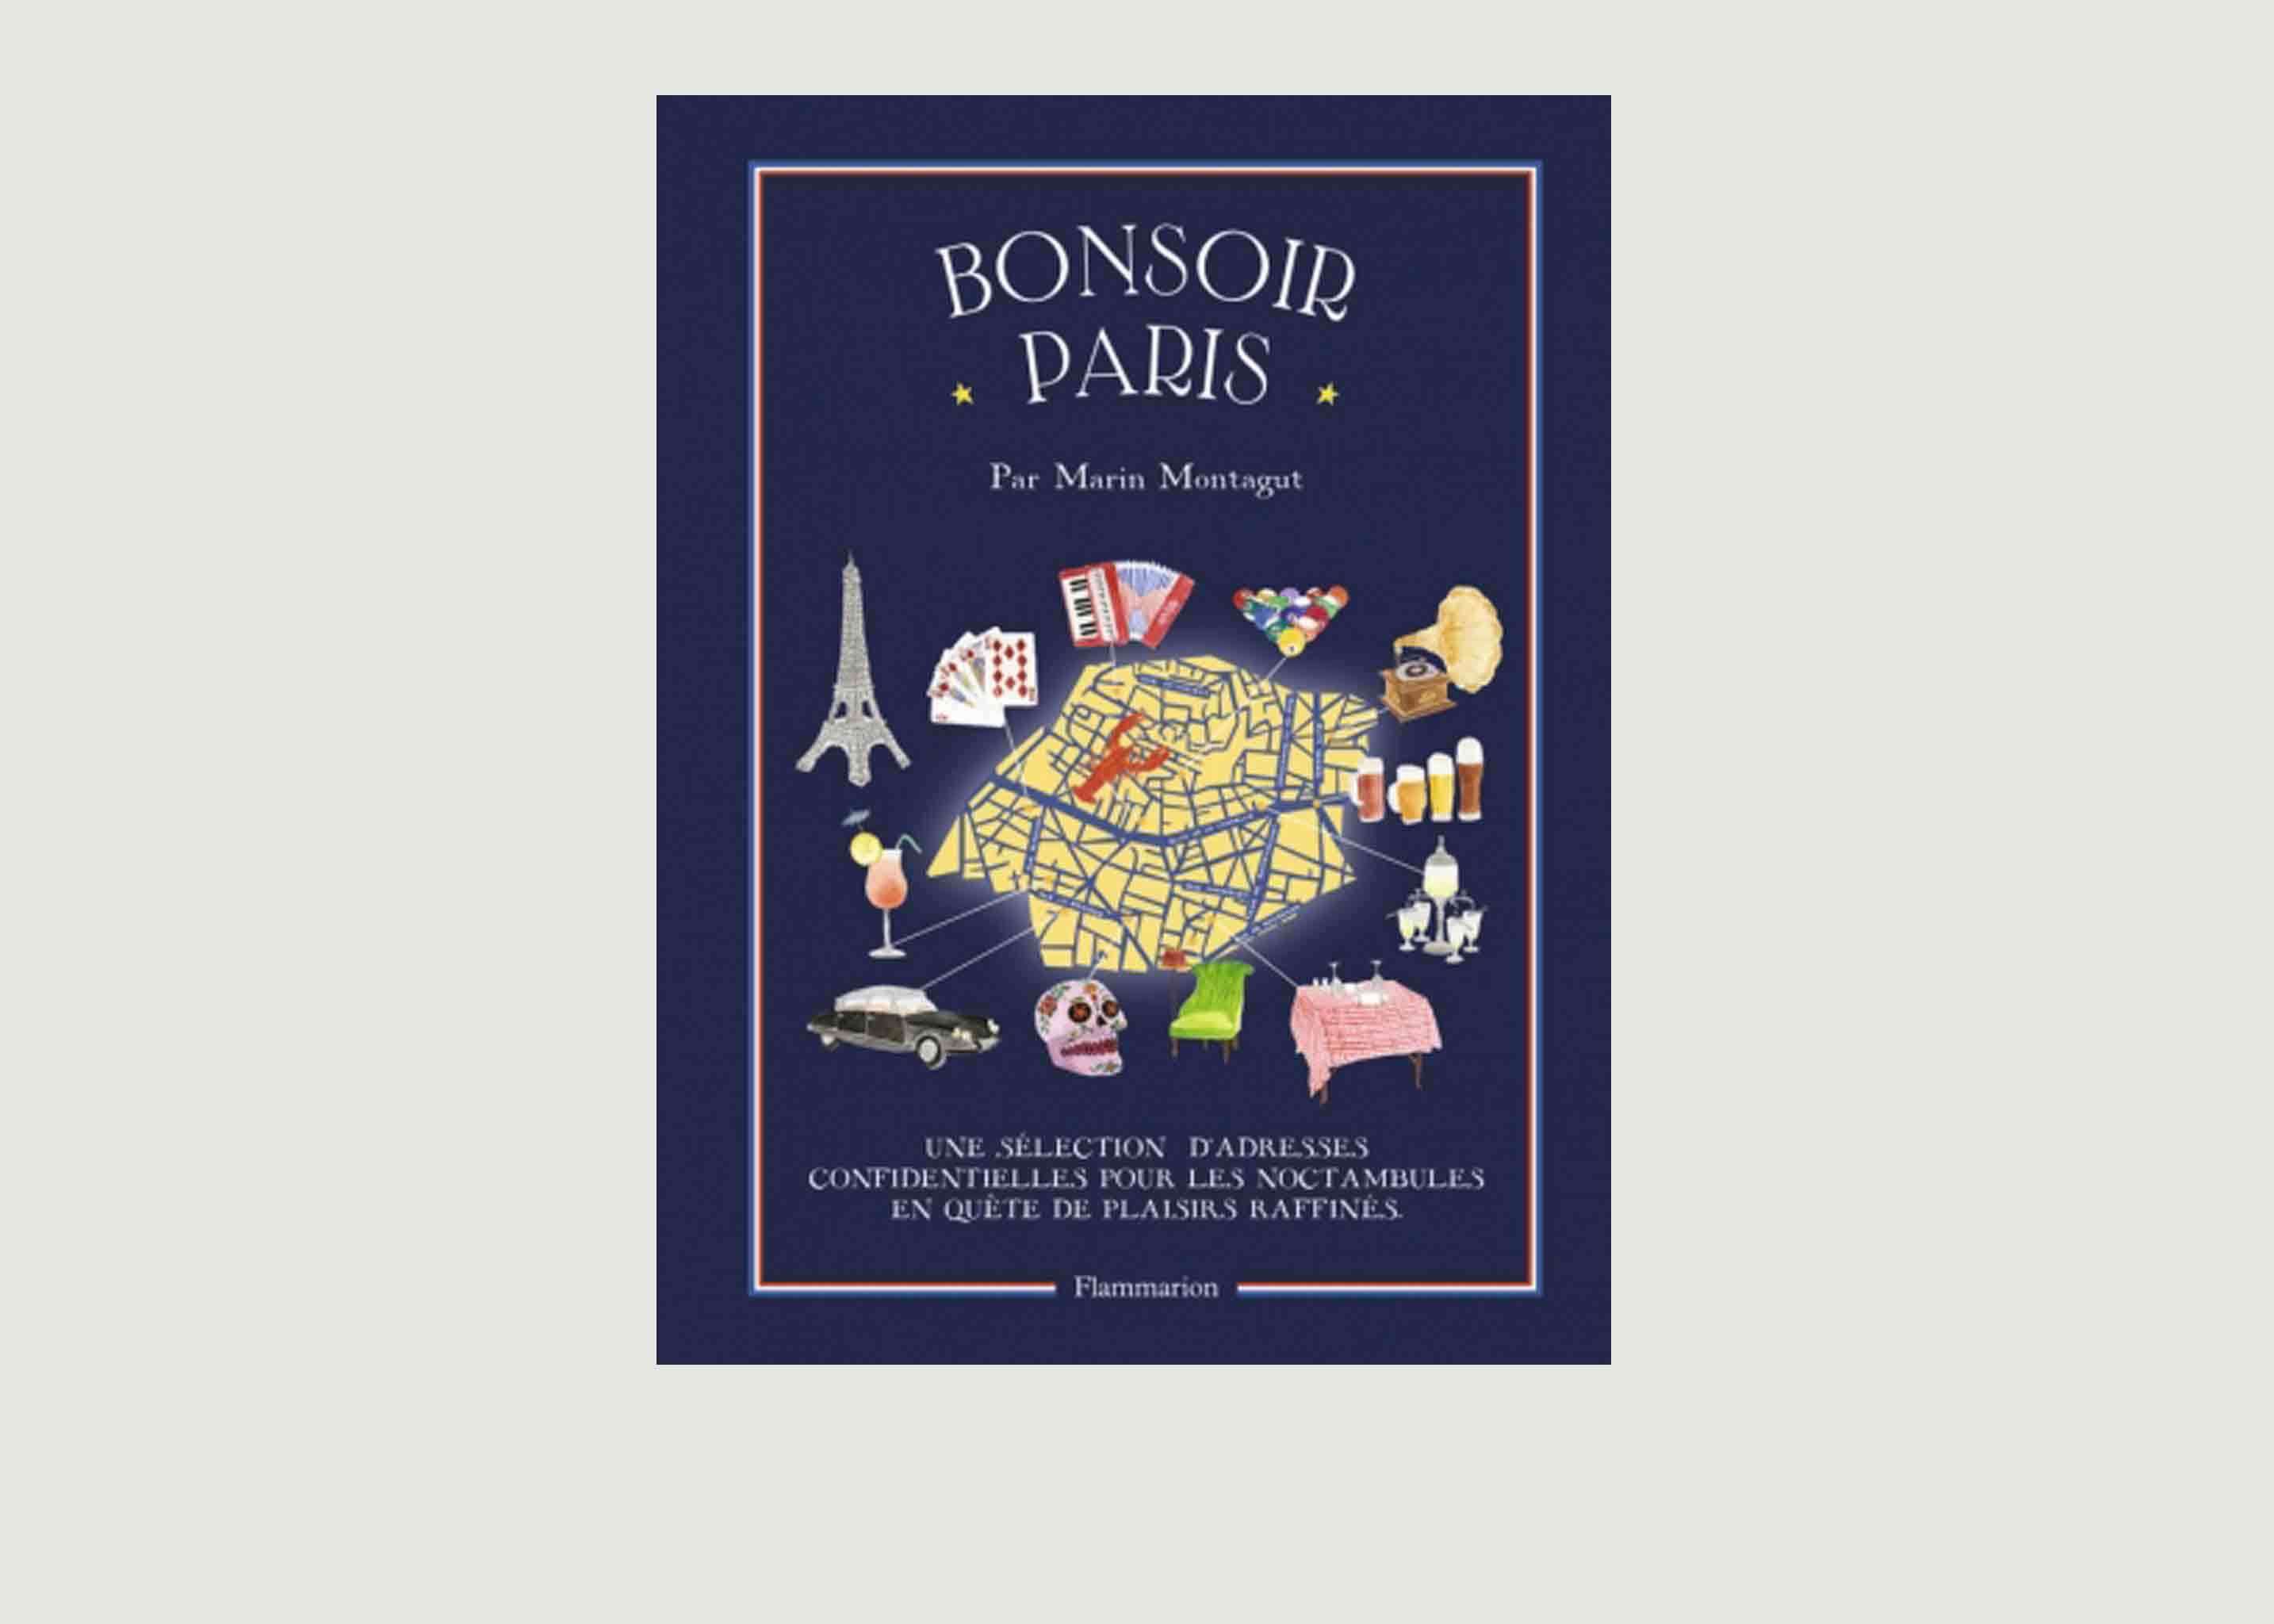 Bonsoir Paris Guide (French Edition) - Flammarion